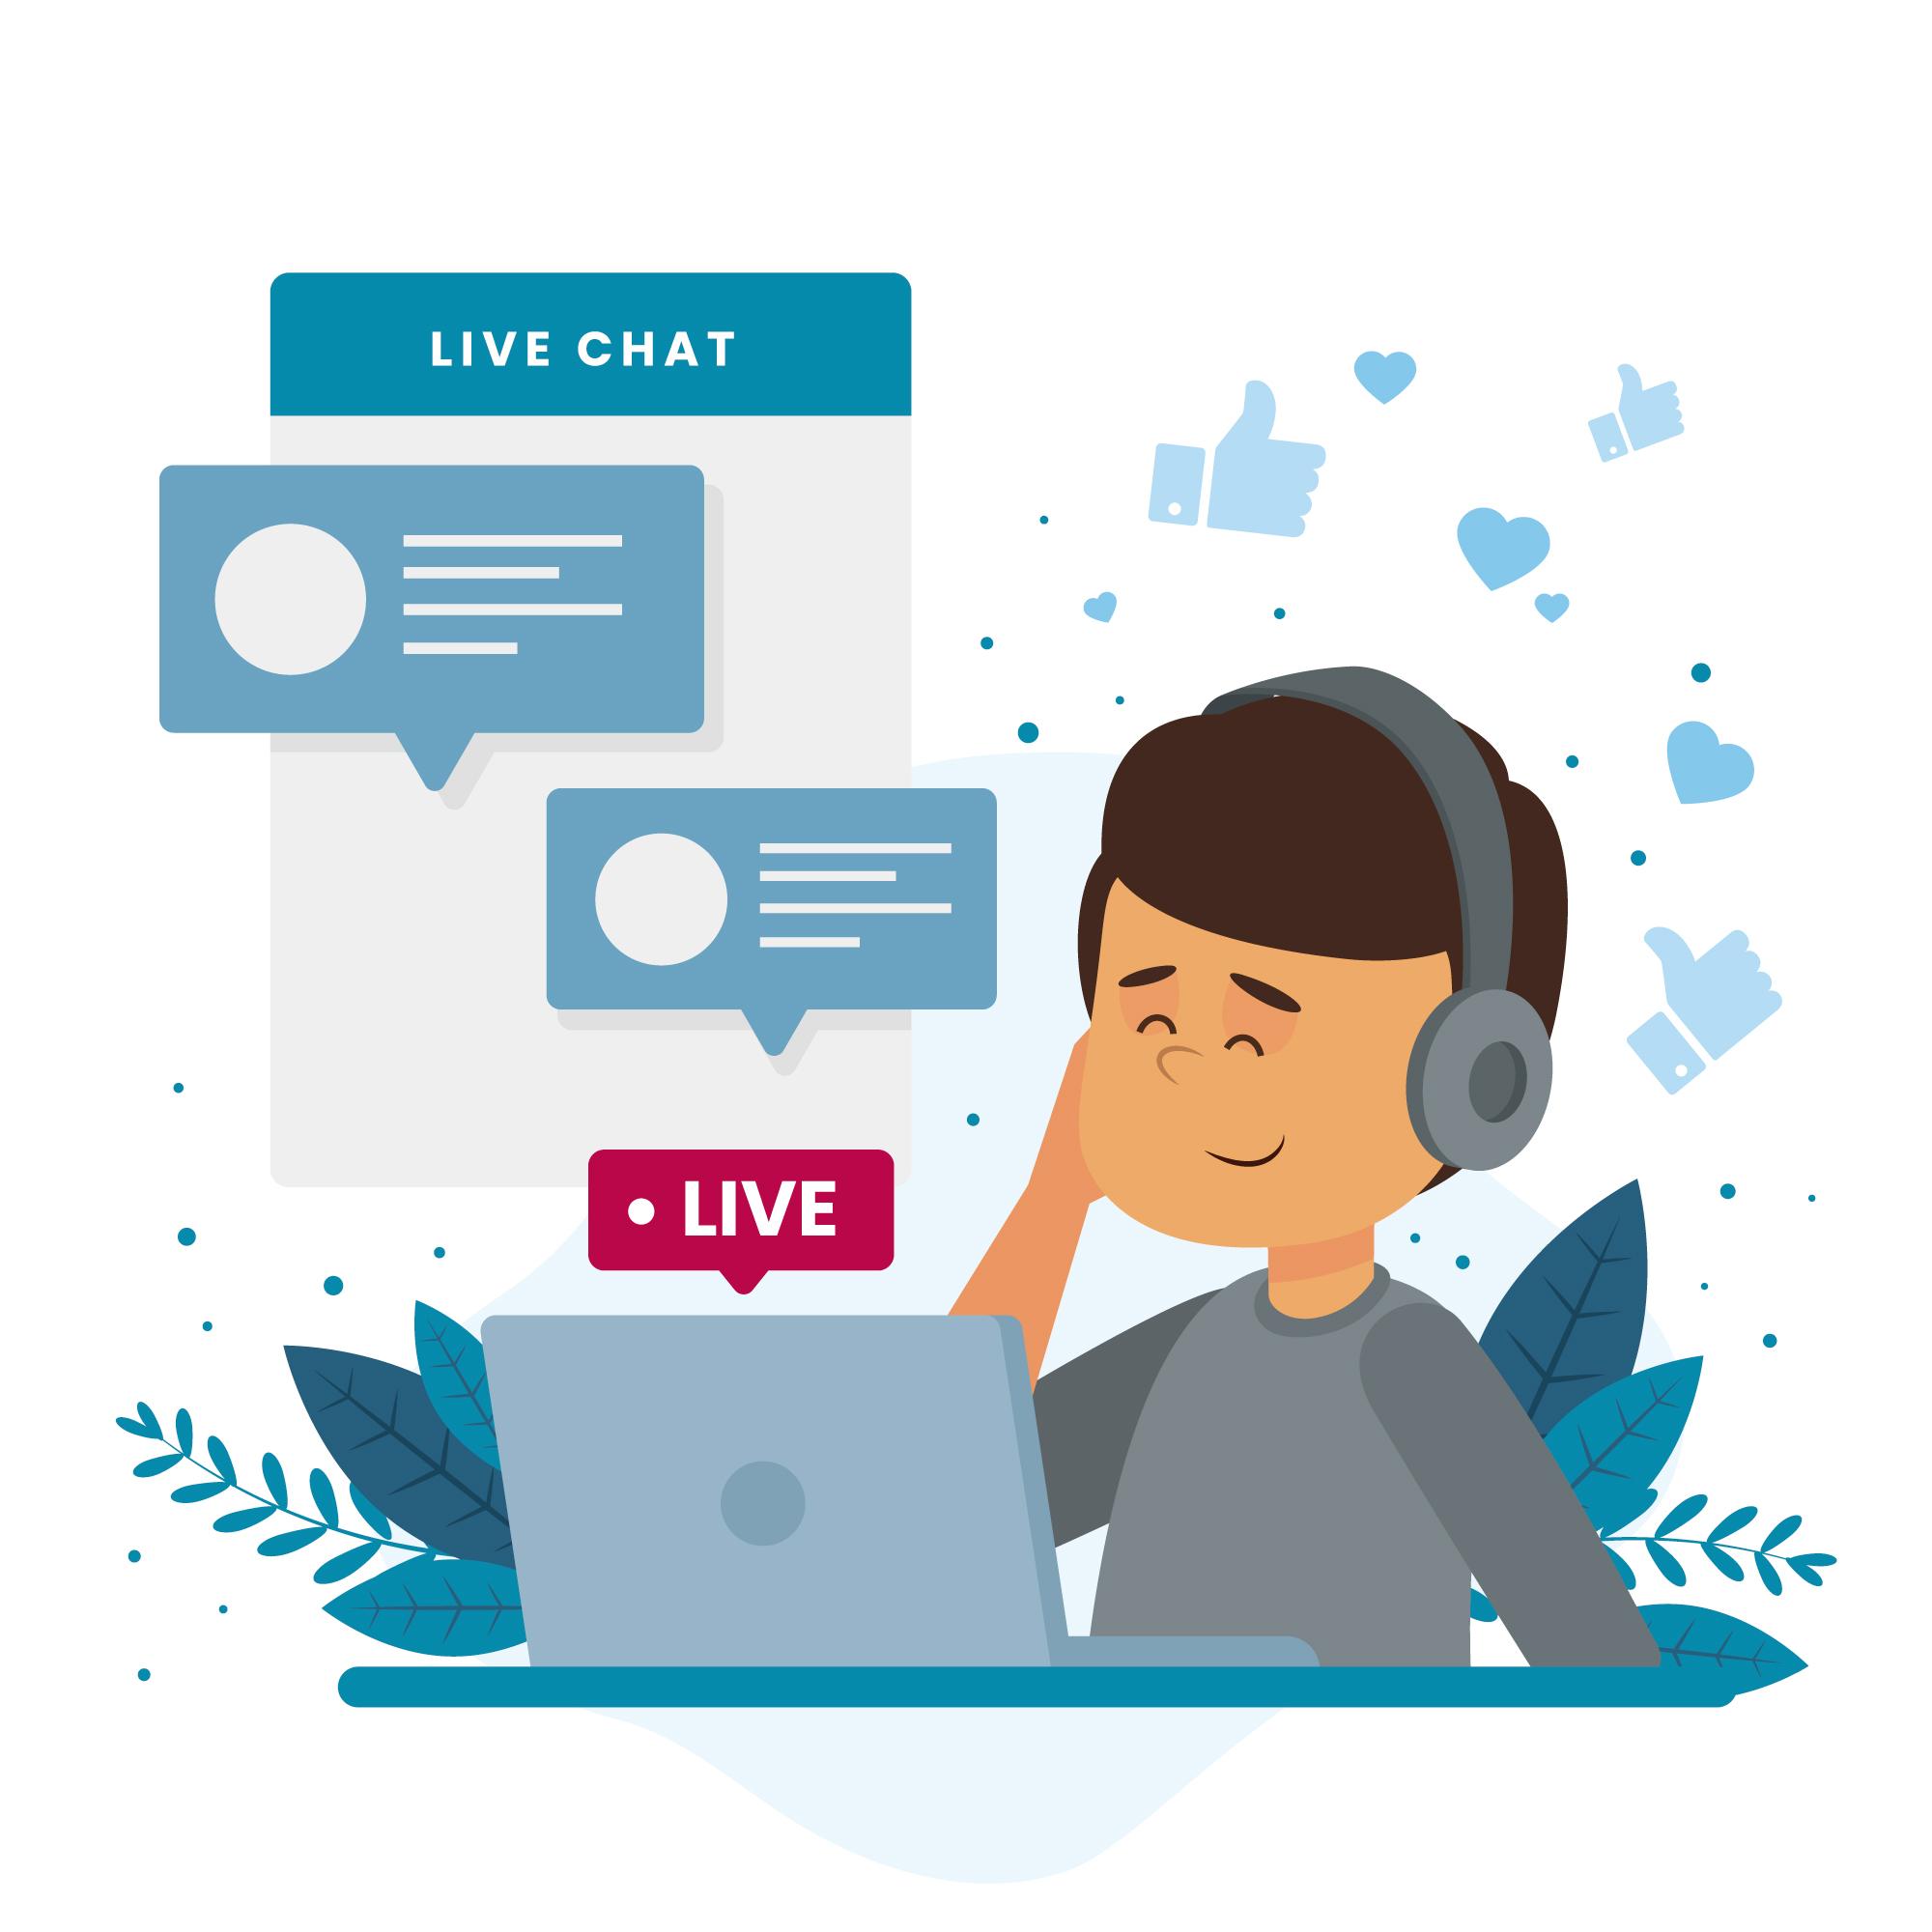 Live Chat Communication